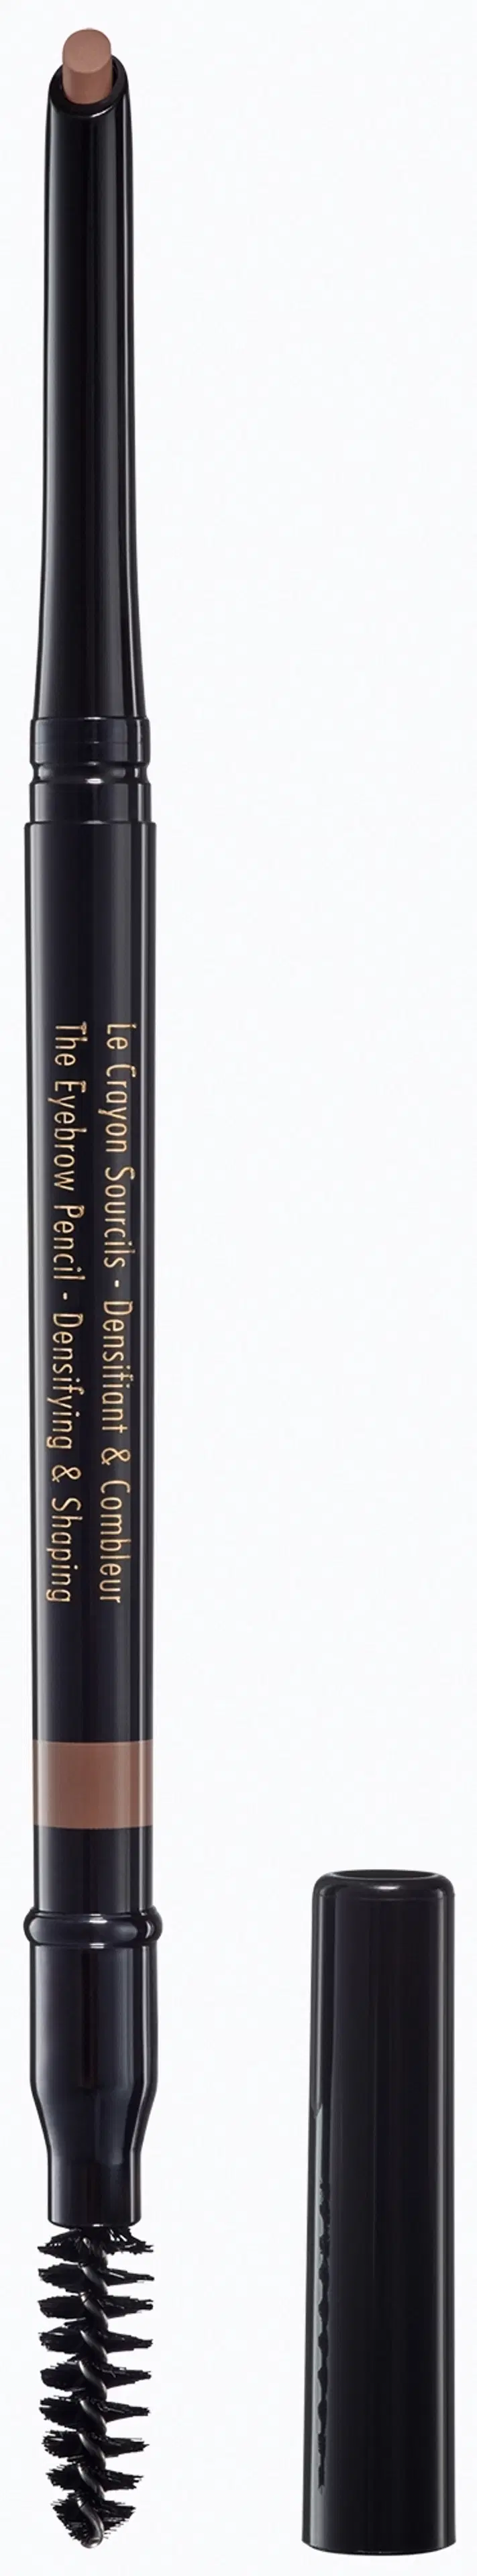 Guerlain Eyebrow Pencil kulmakarvakynä 3,5 g